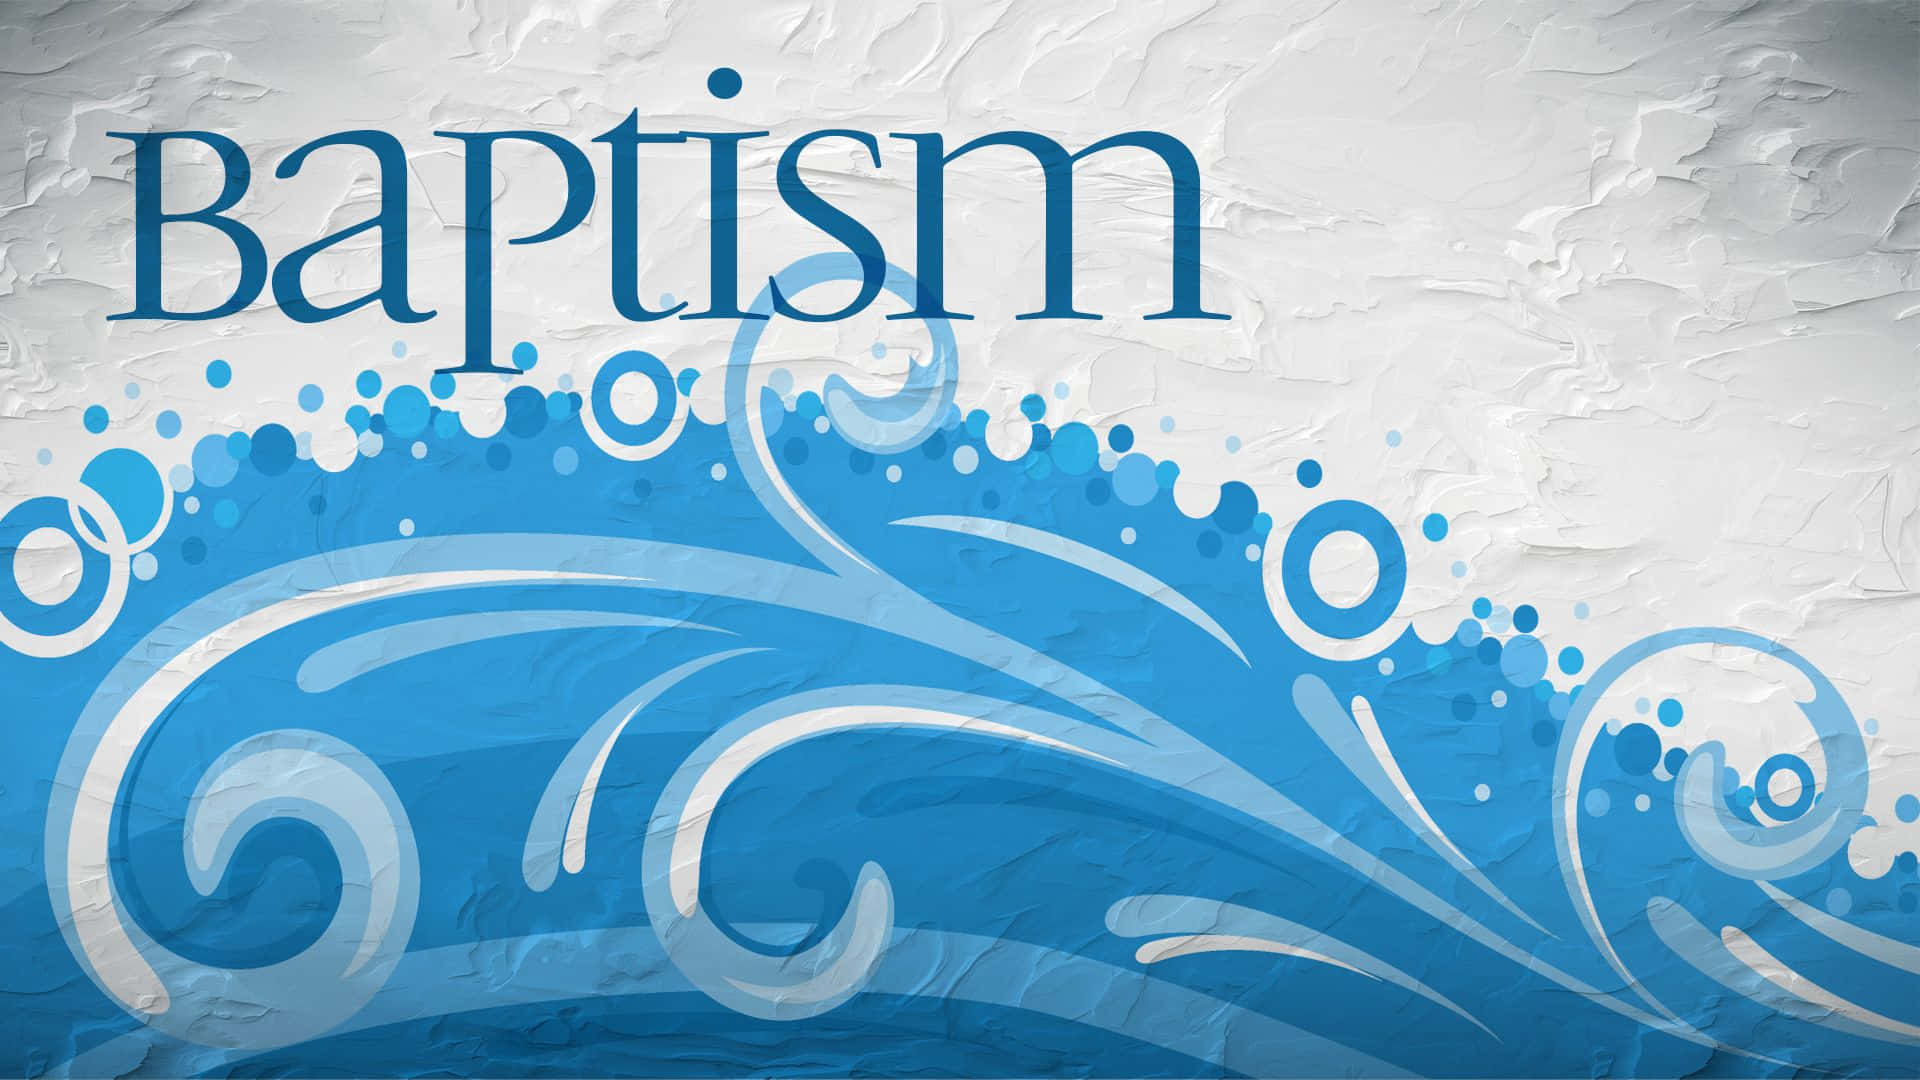 Baptism Background Illustration